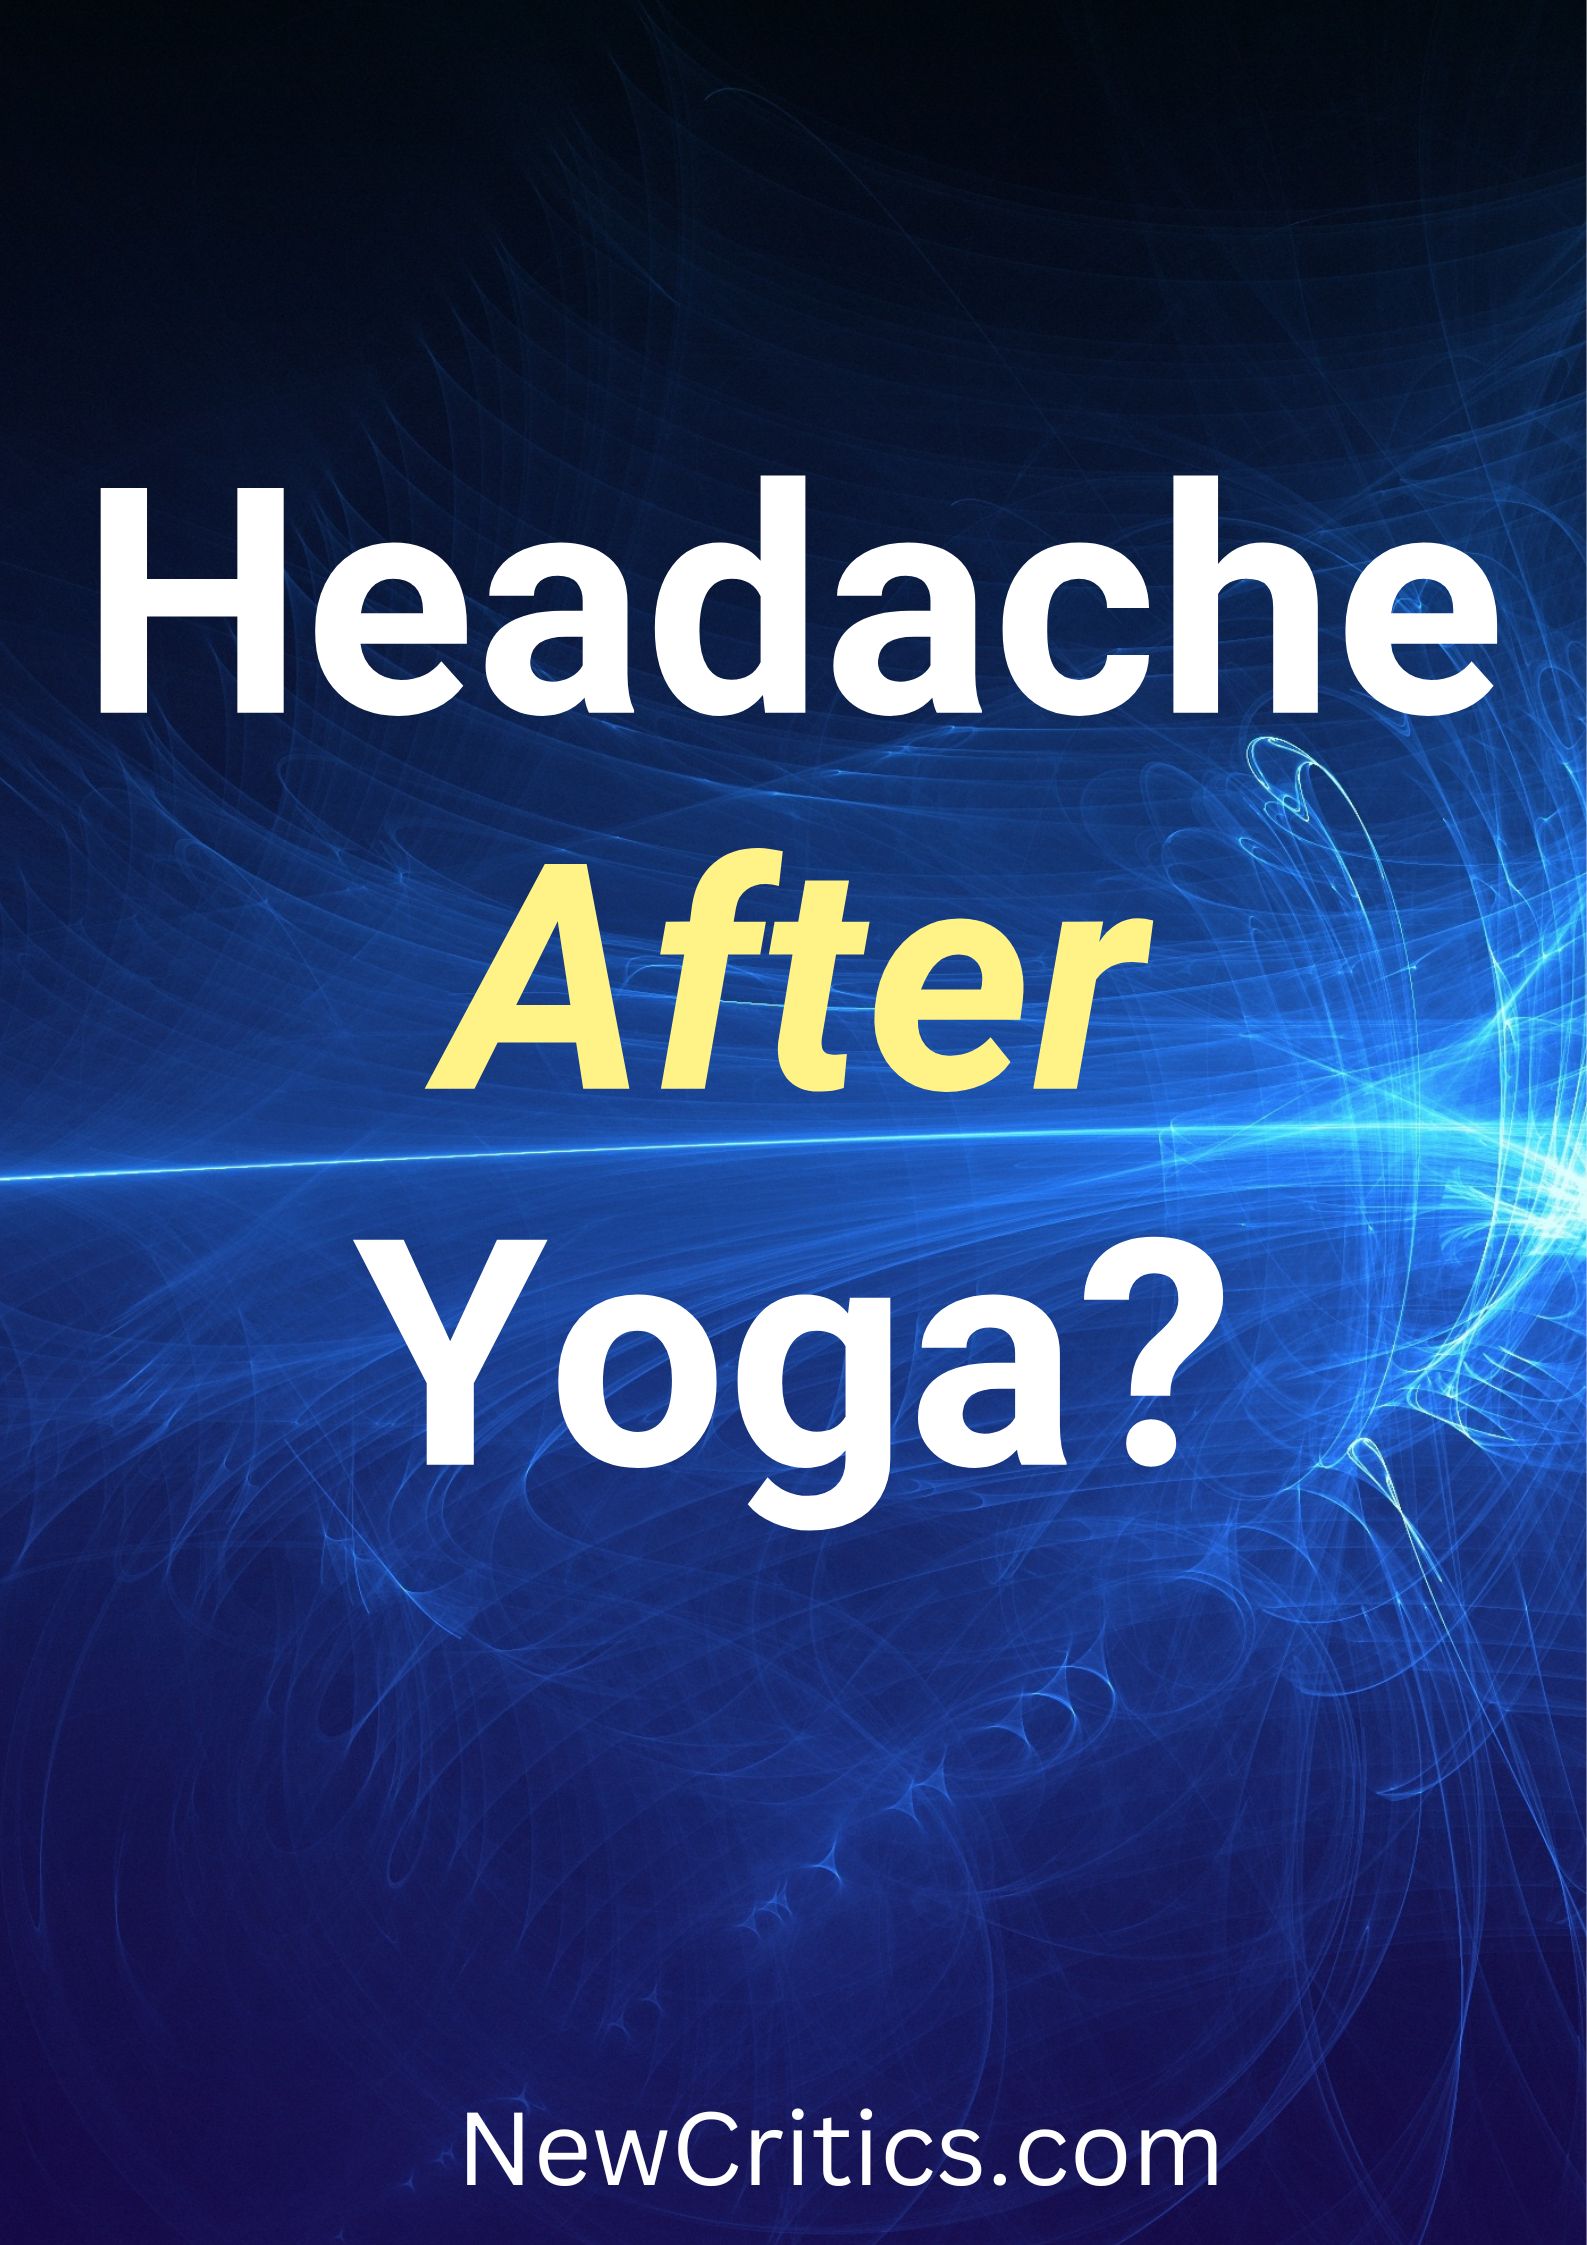 Headache After Yoga / Canva